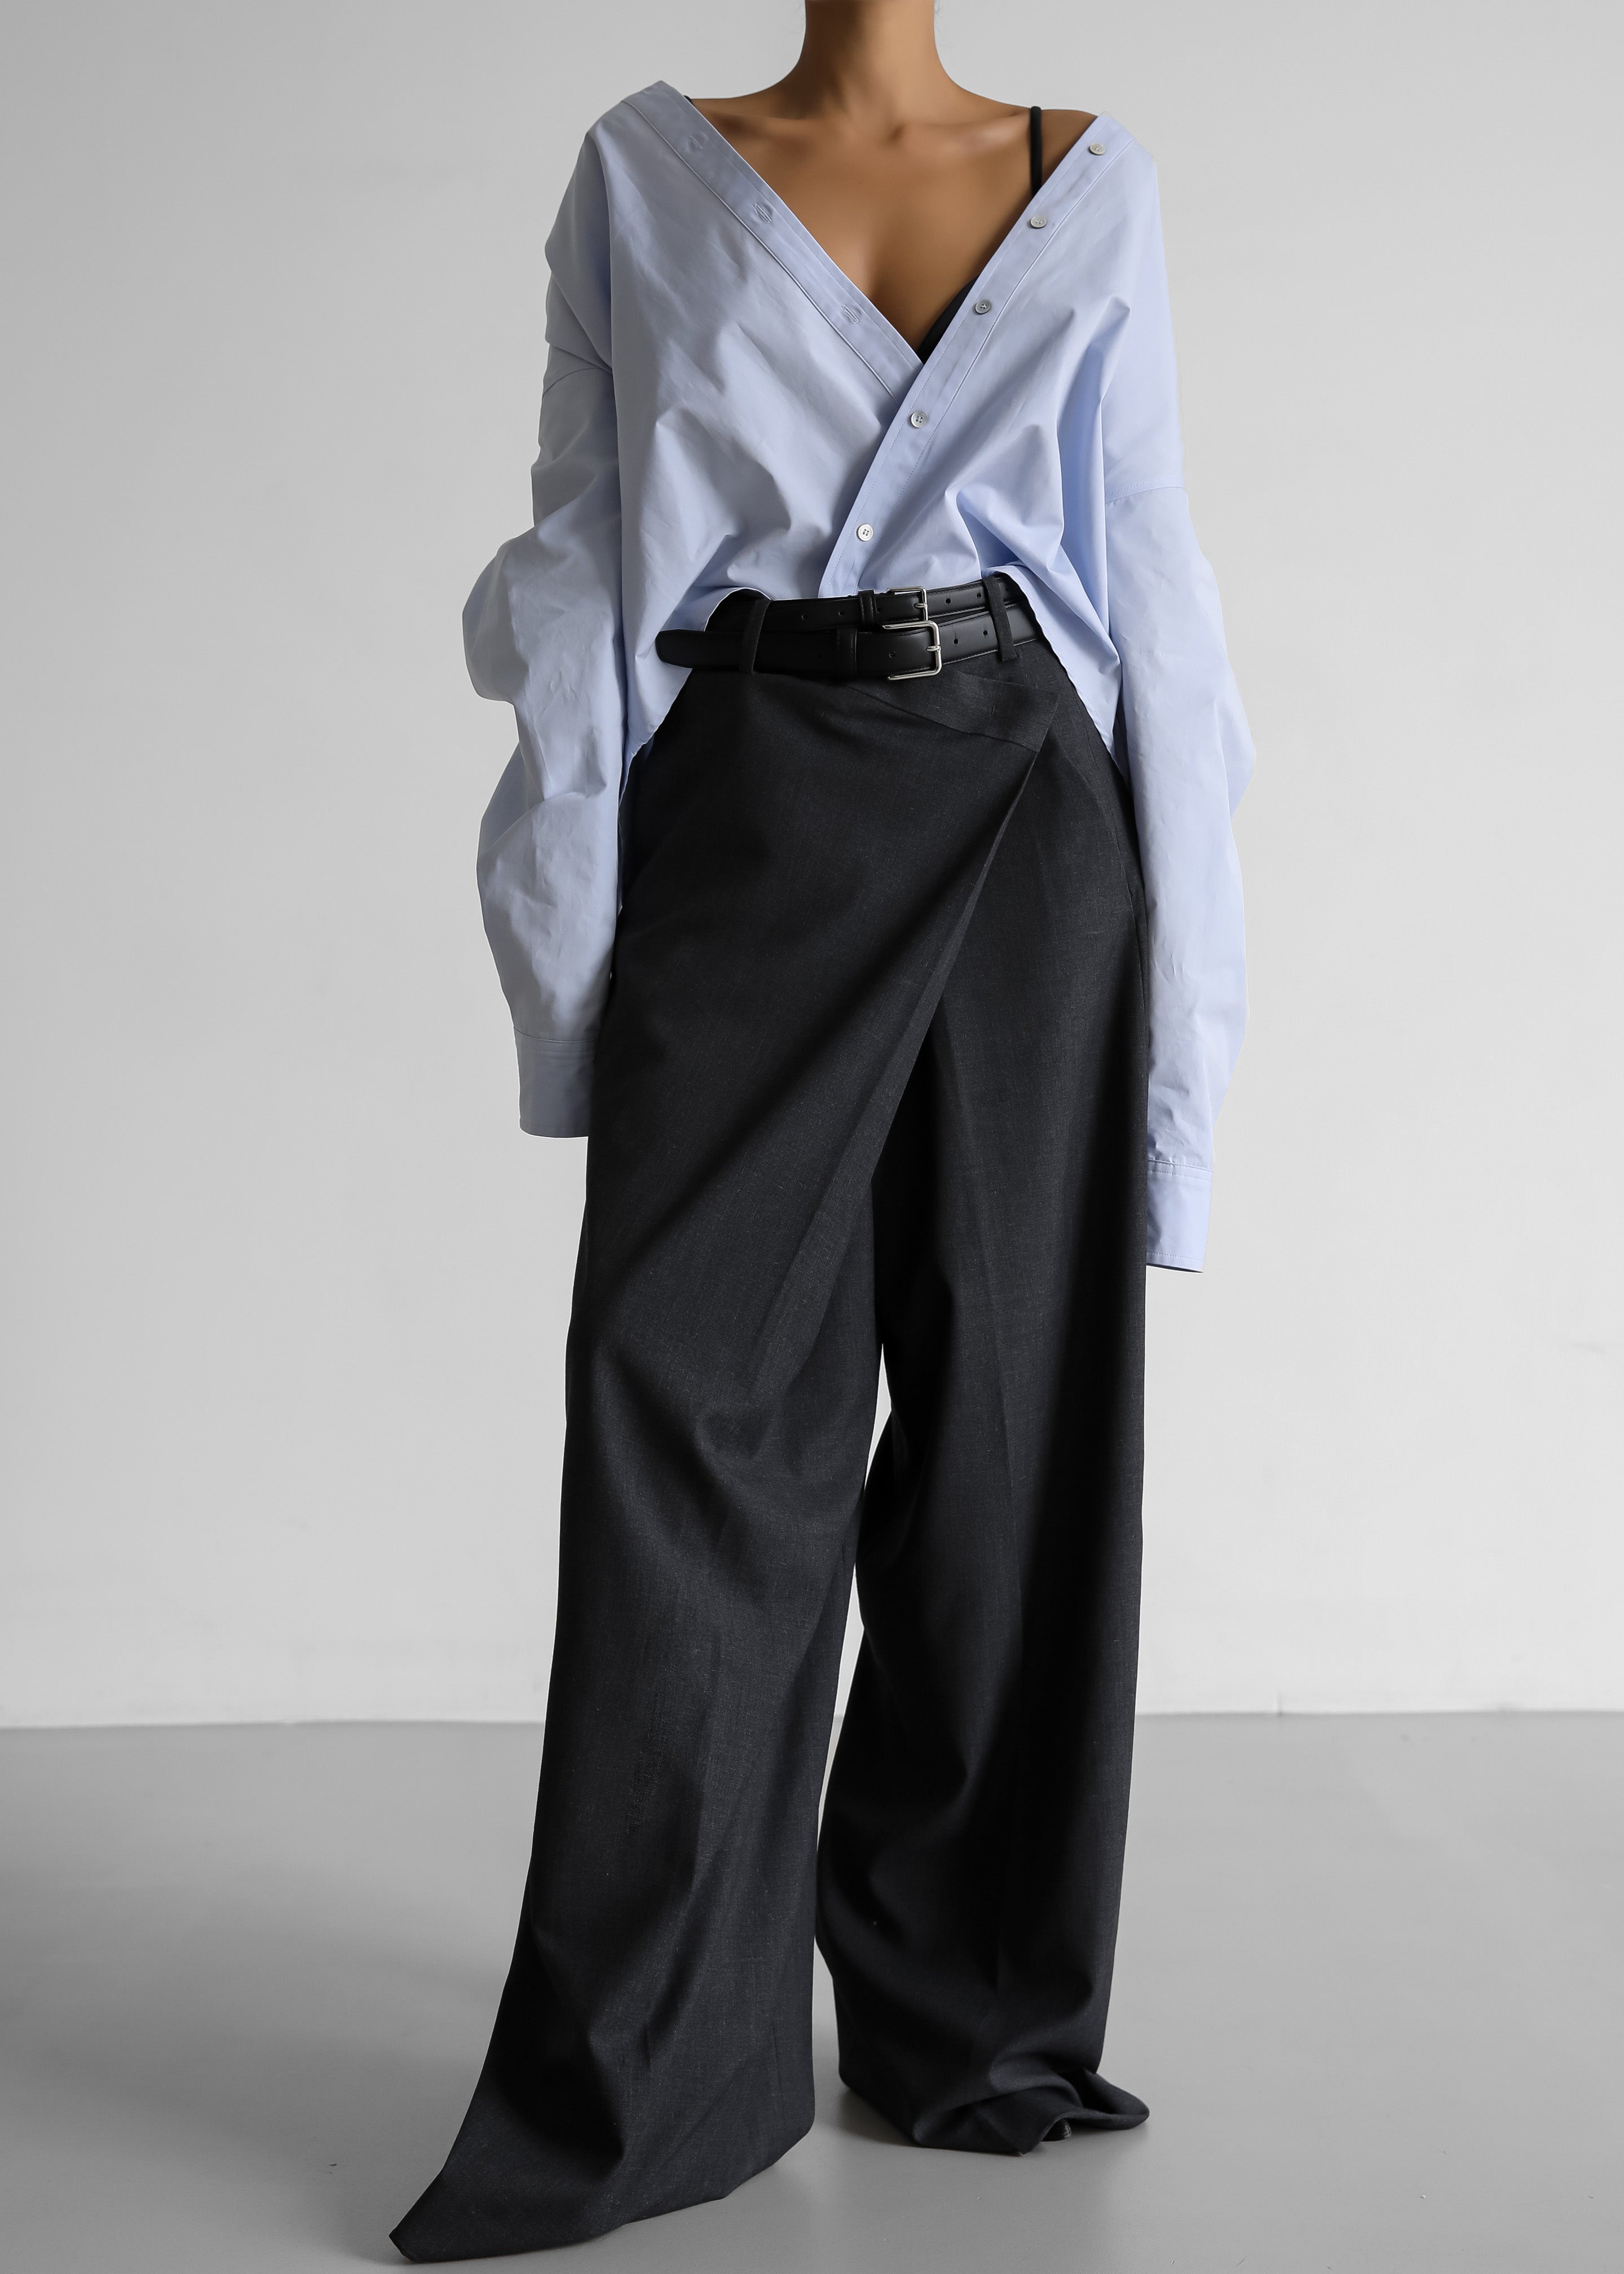 Zara asymmetric grey wide leg trousers - new